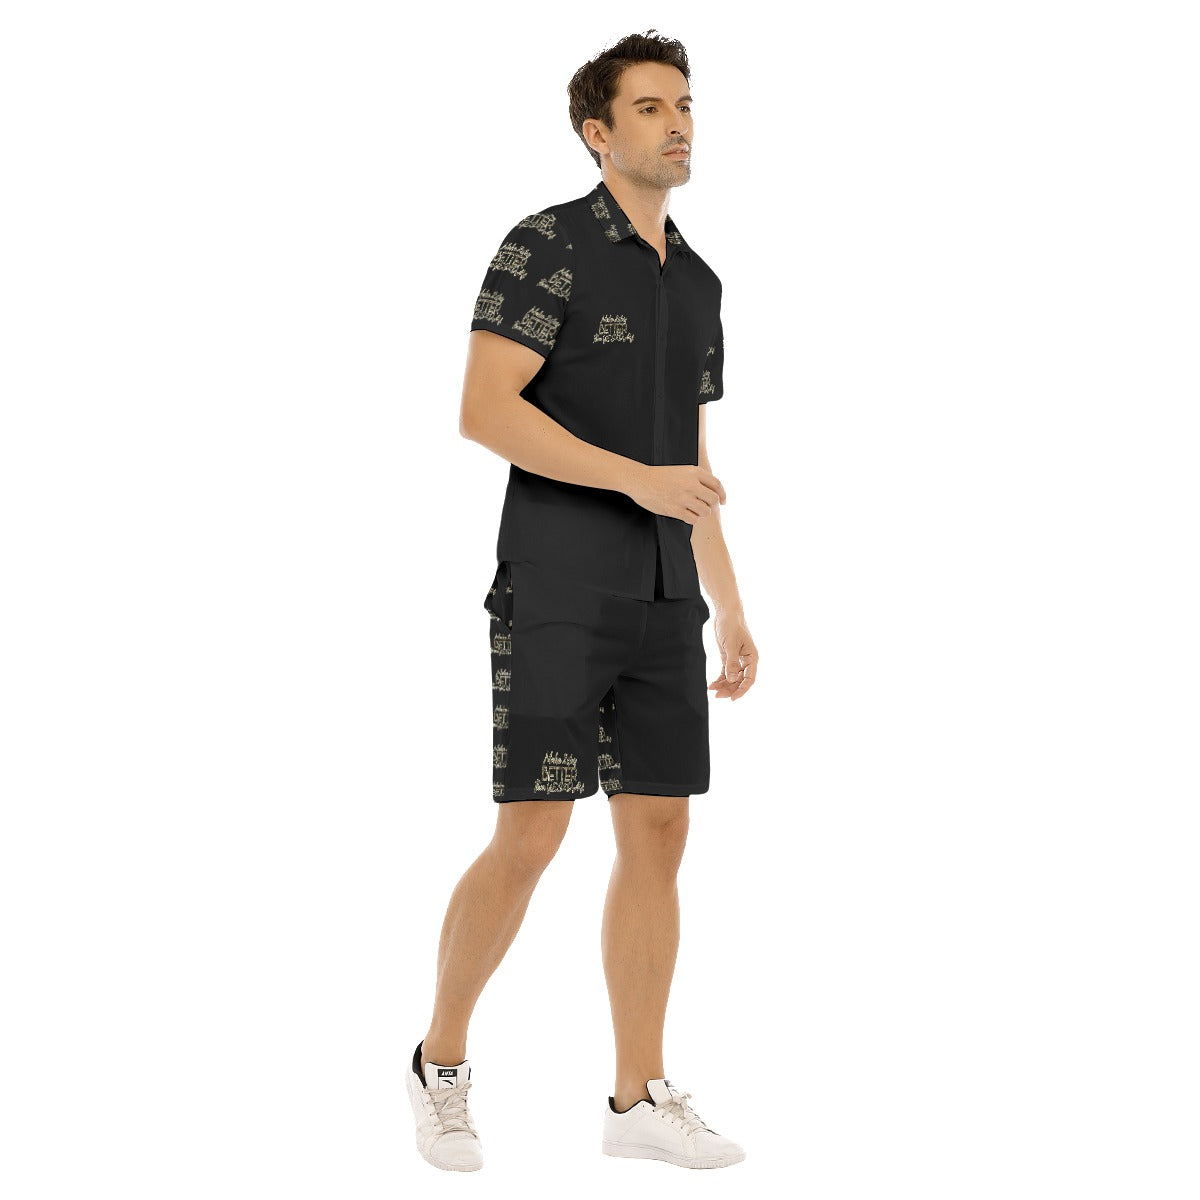 Men's Short Sleeve Shirt Set Make 2Day Better Then YES2DAY